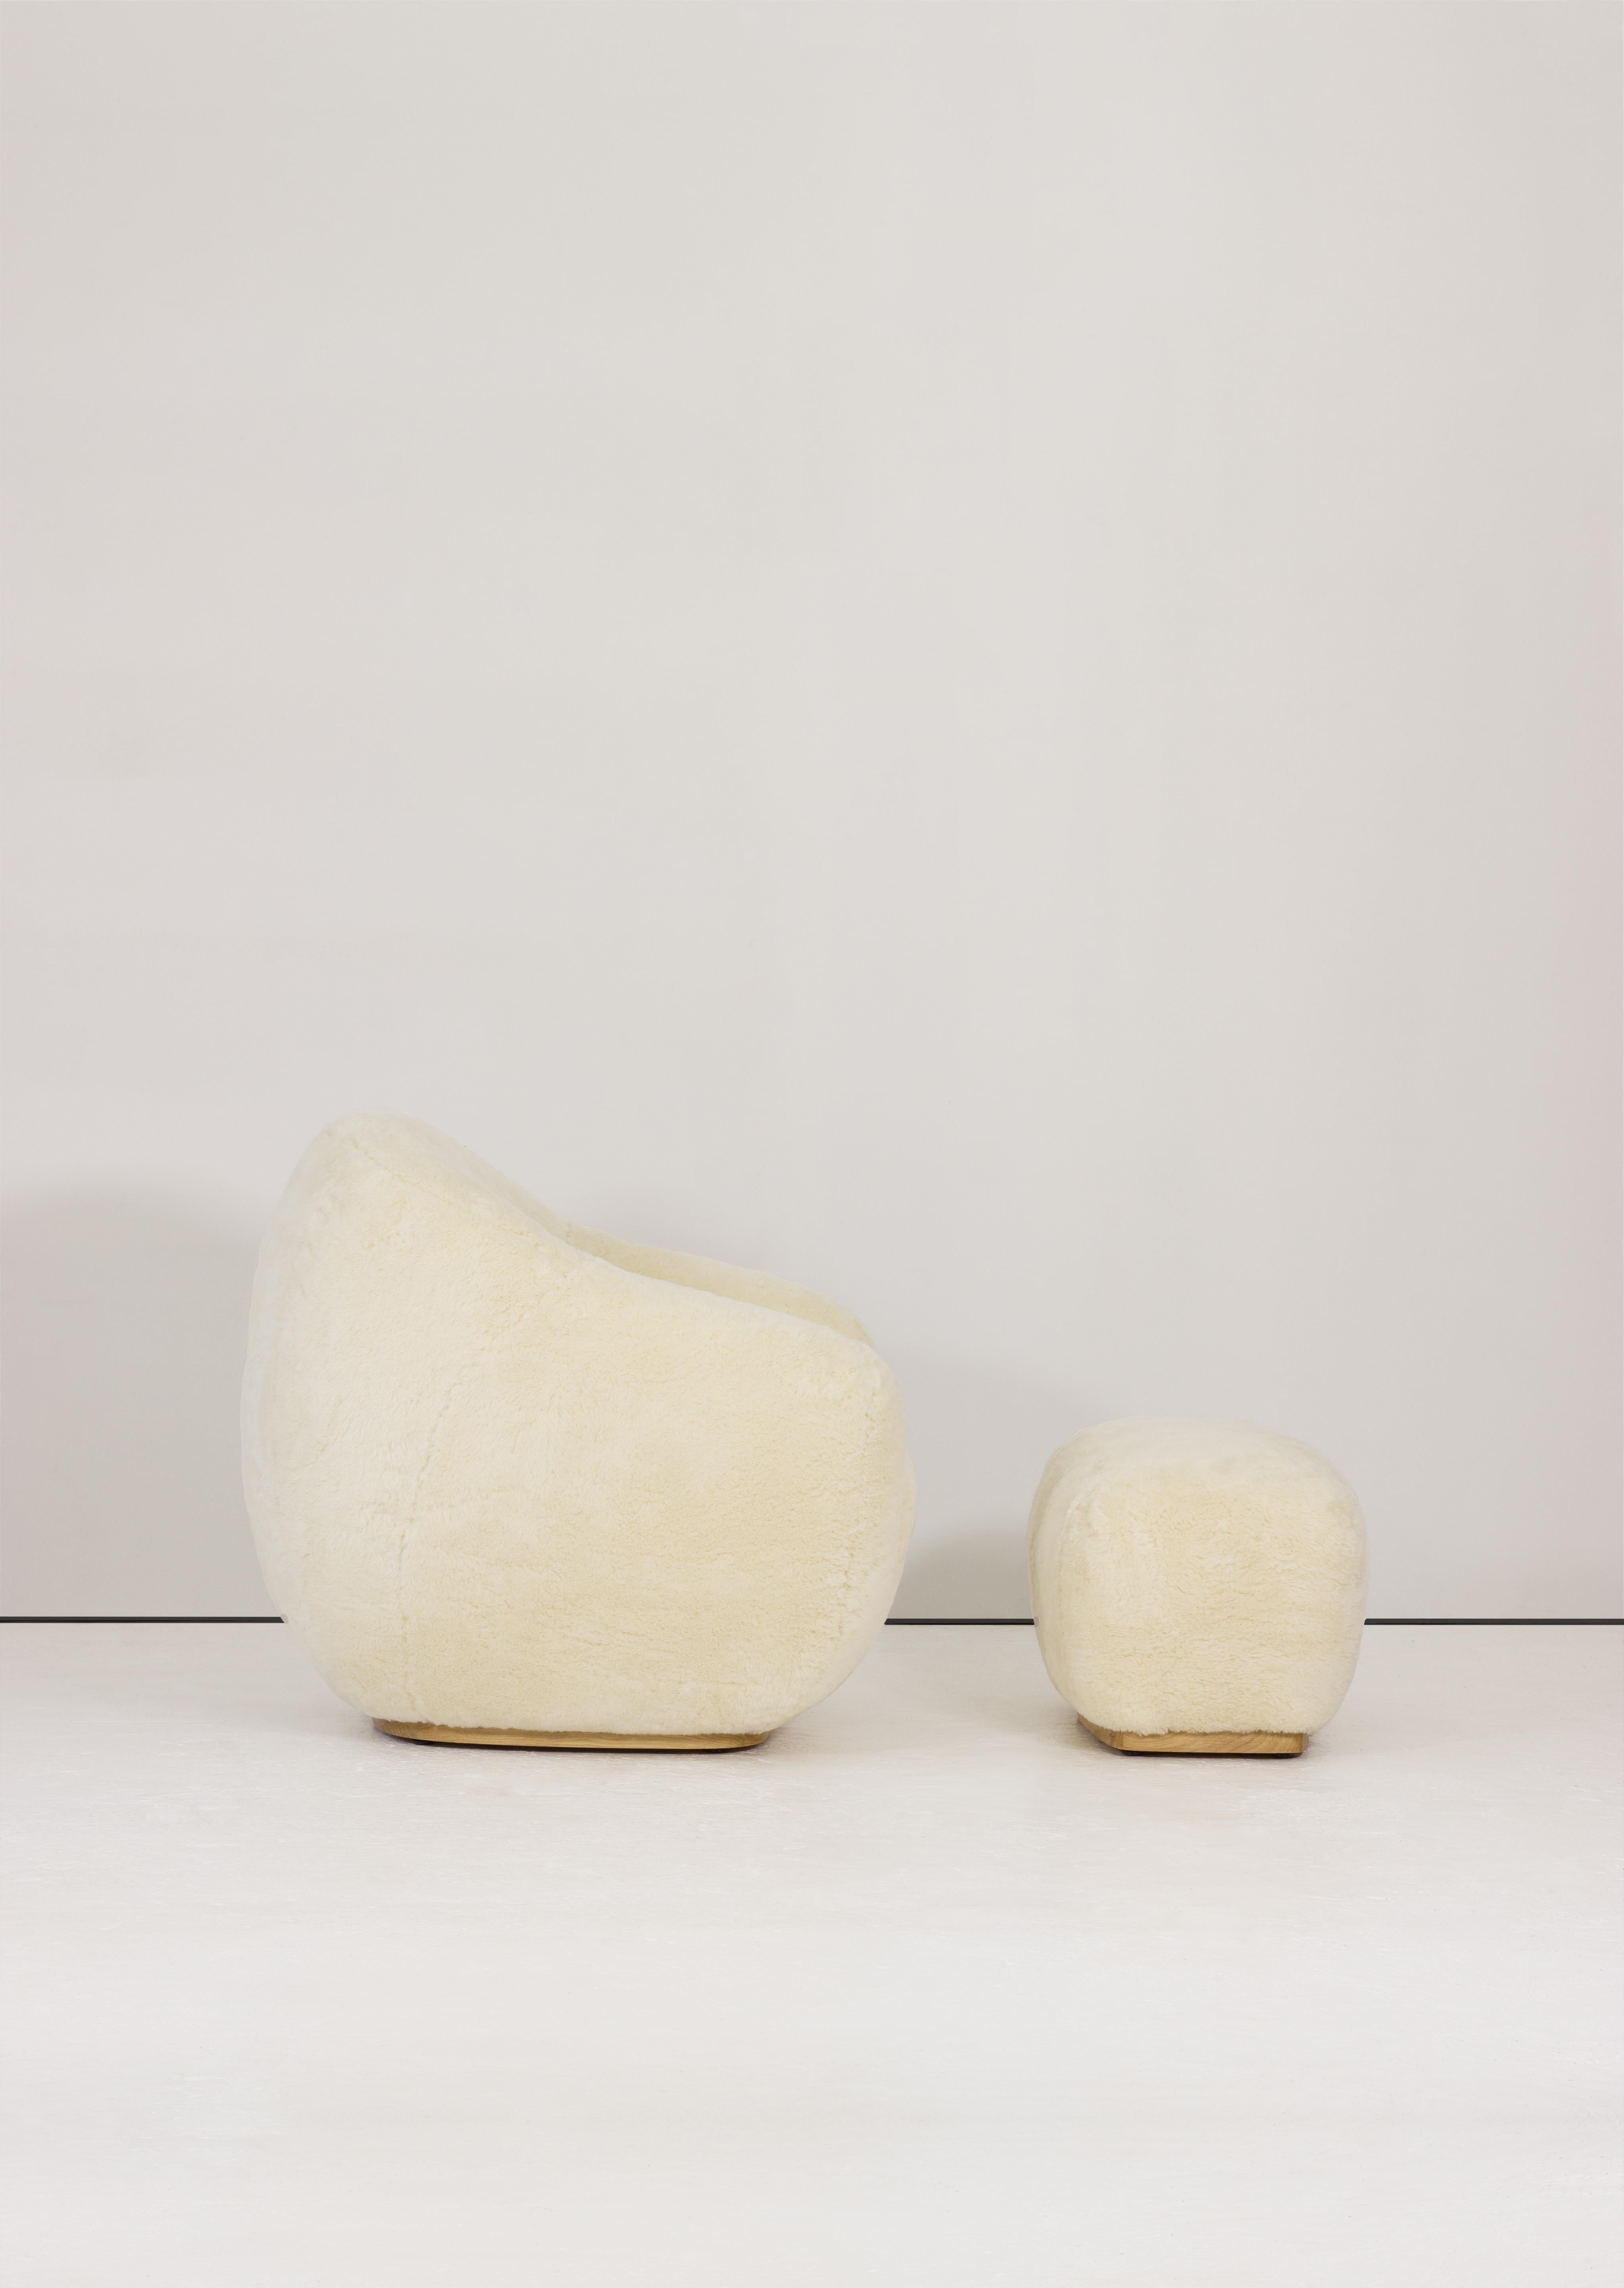 Niemeyer II Armchair and Stool, COM, InsidherLand by Joana Santos Barbosa For Sale 3